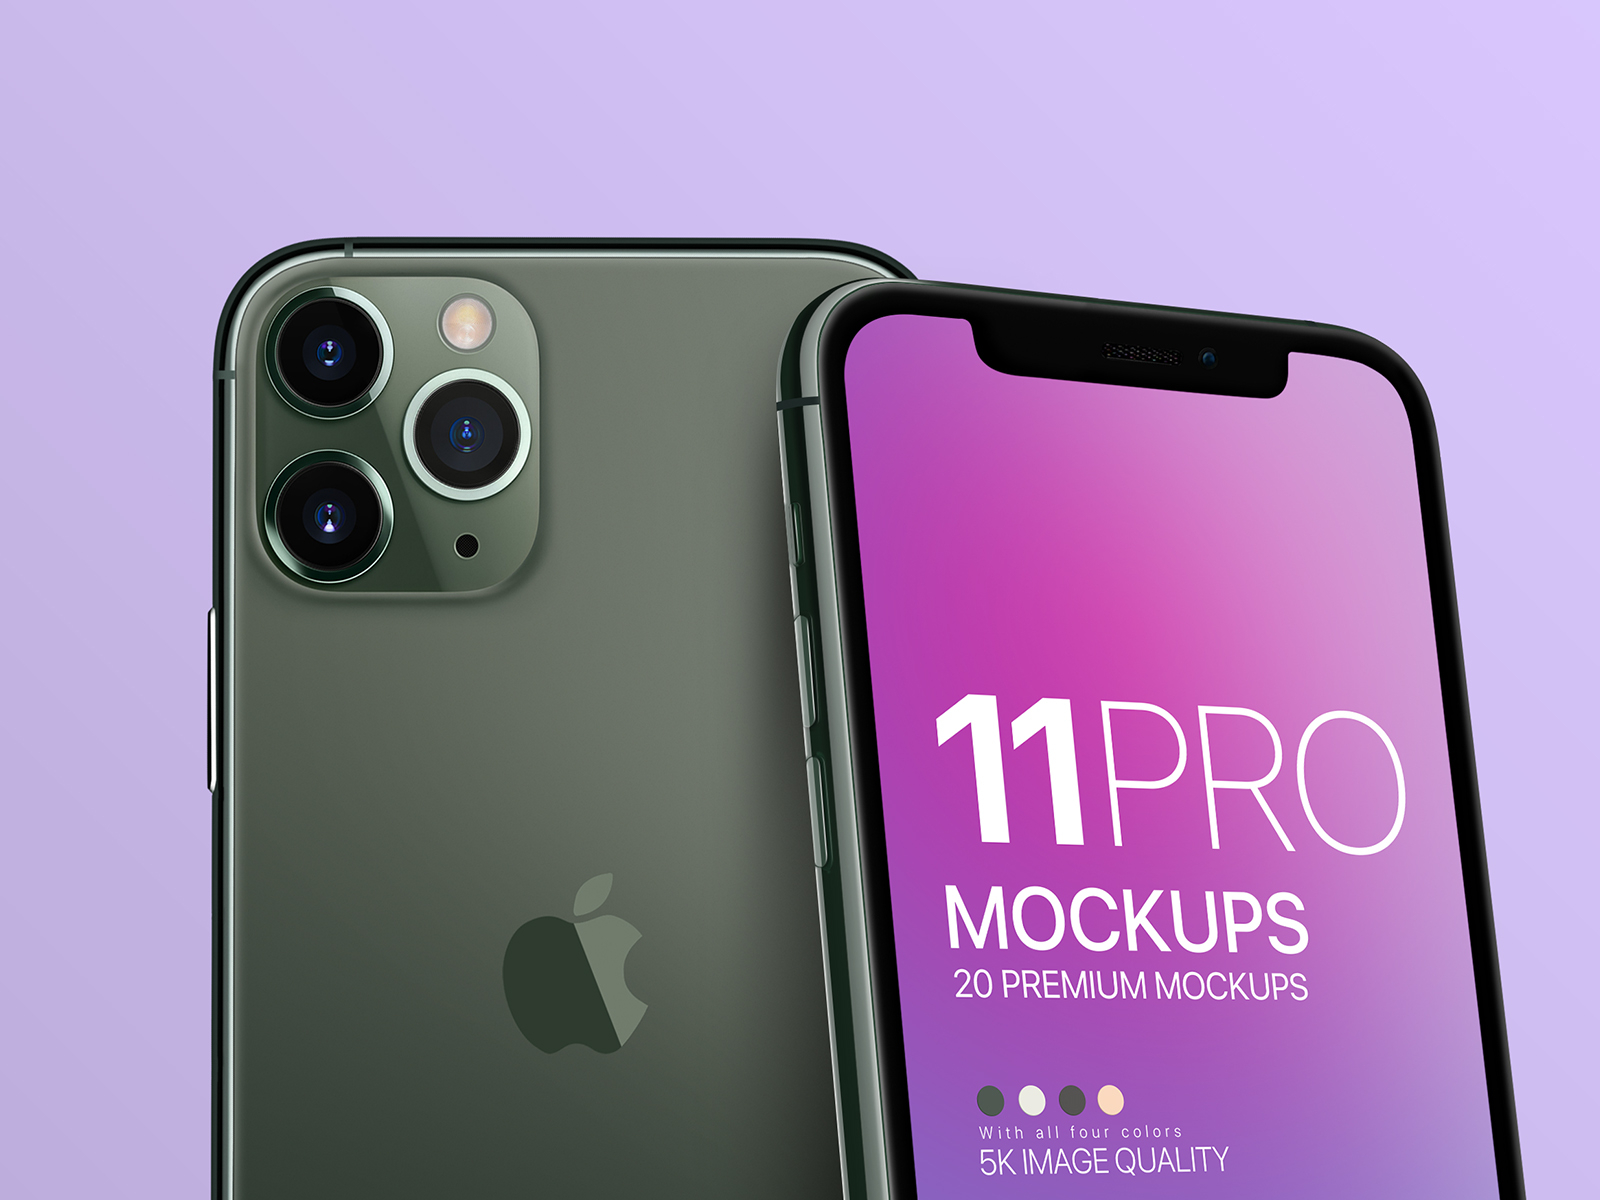 Download Iphone 11 Pro Display Mockups Vol 02 By Pixpine Mockups On Dribbble